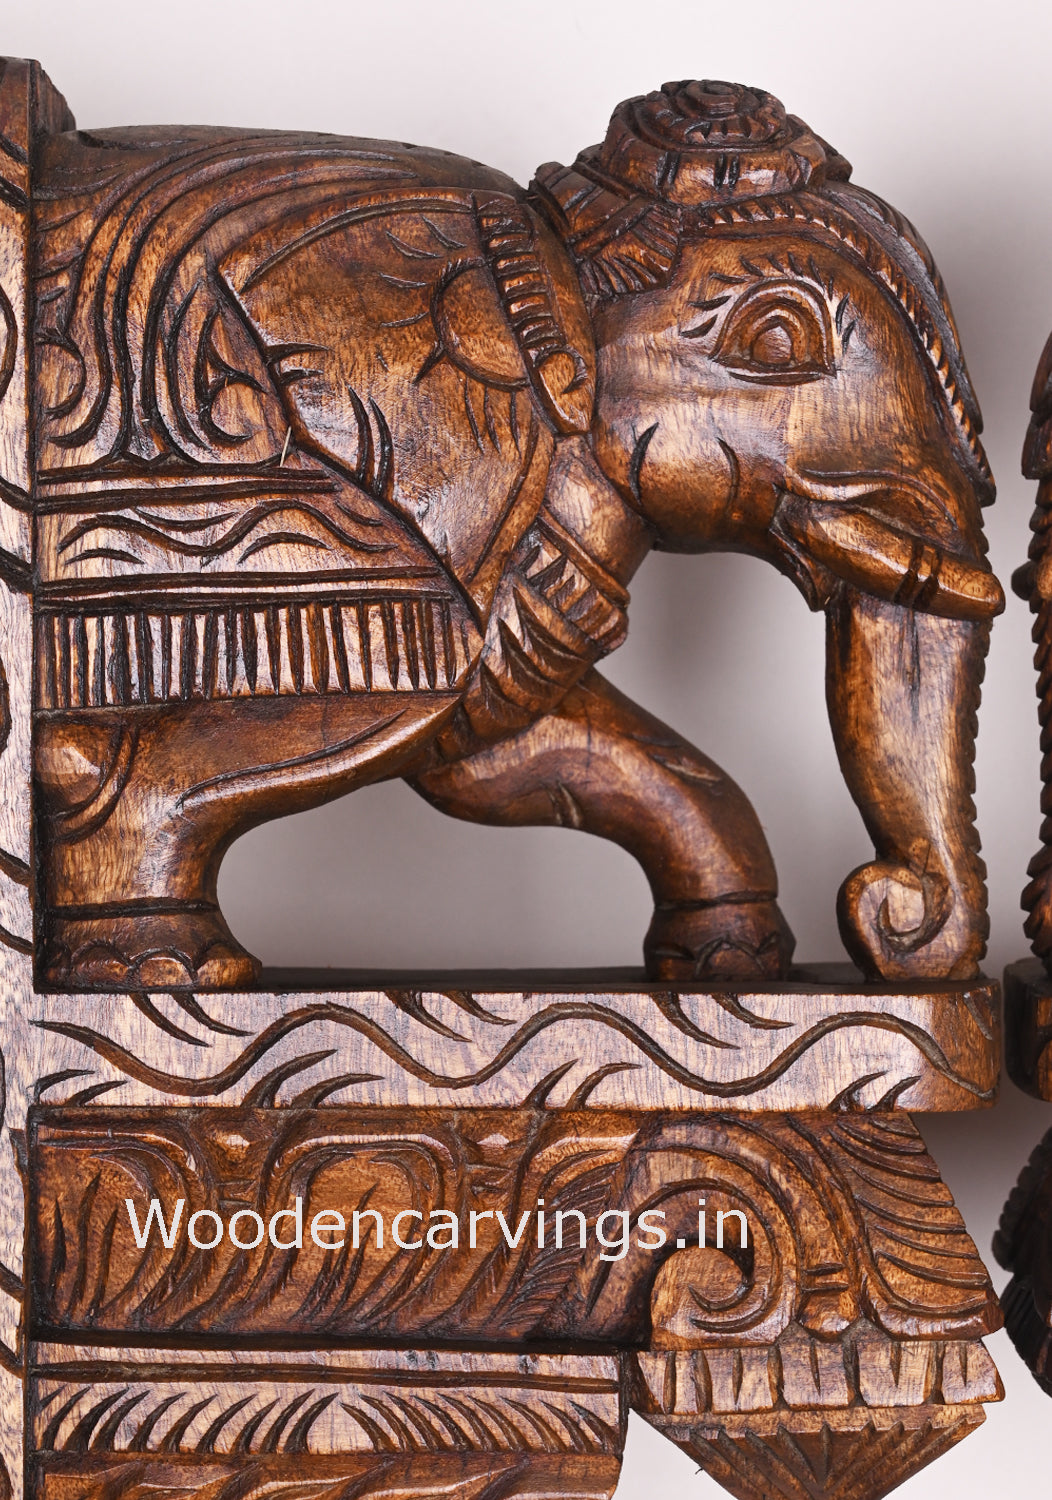 Standing Paired Beautiful Elephants Hooks Fixed Fine Finishing Wooden Wall Brackets 16"